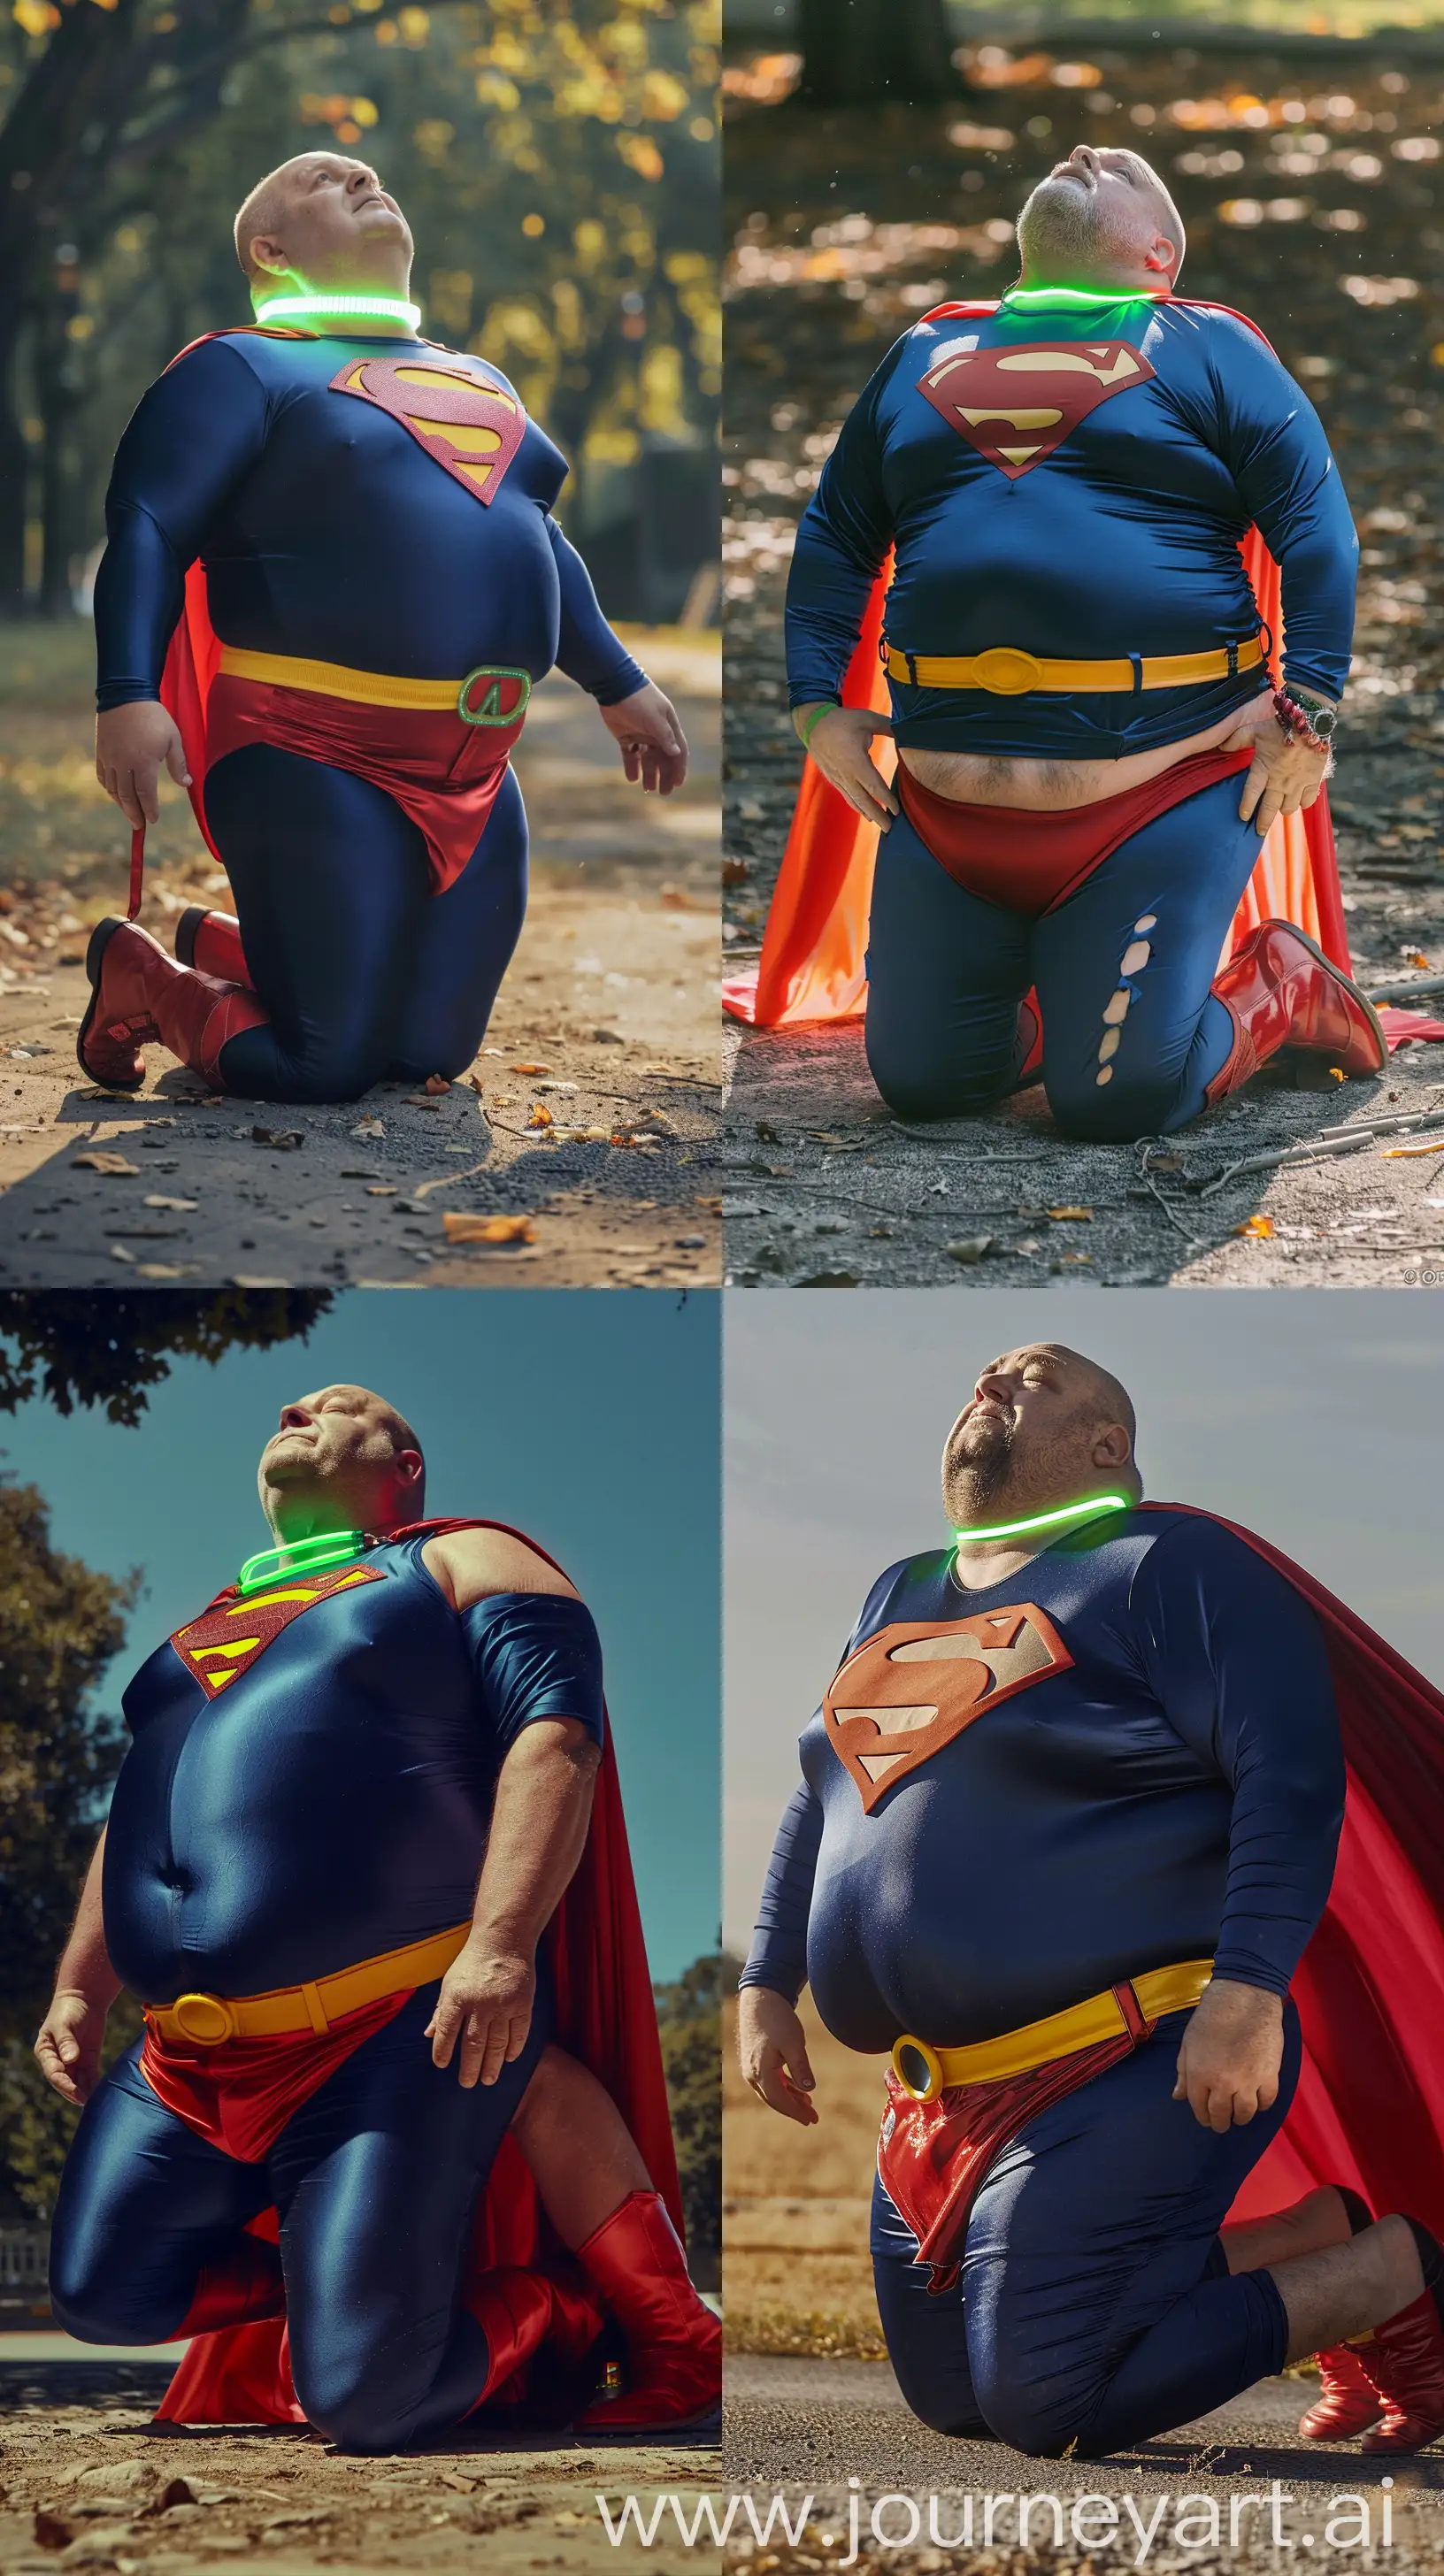 Elderly-Superman-in-Navy-Blue-Costume-Kneeling-Outdoors